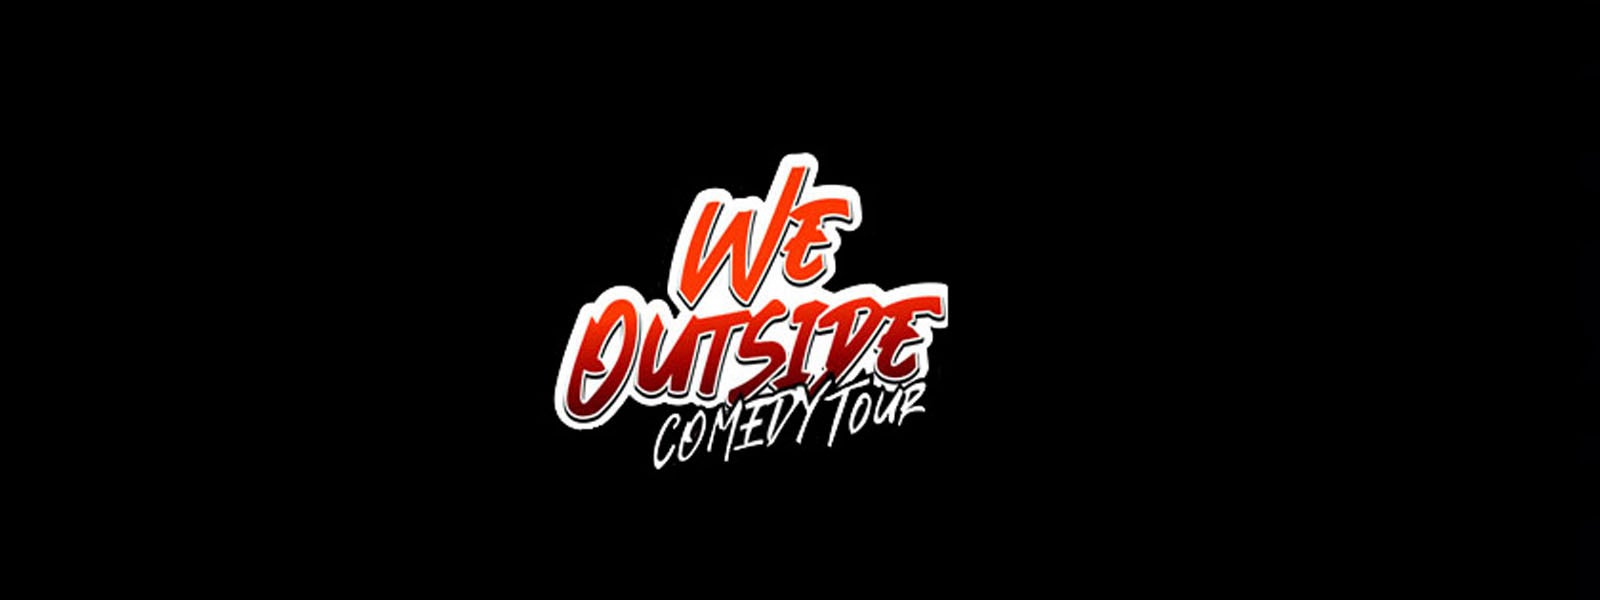 CANCELED - "We Outside" Comedy Tour